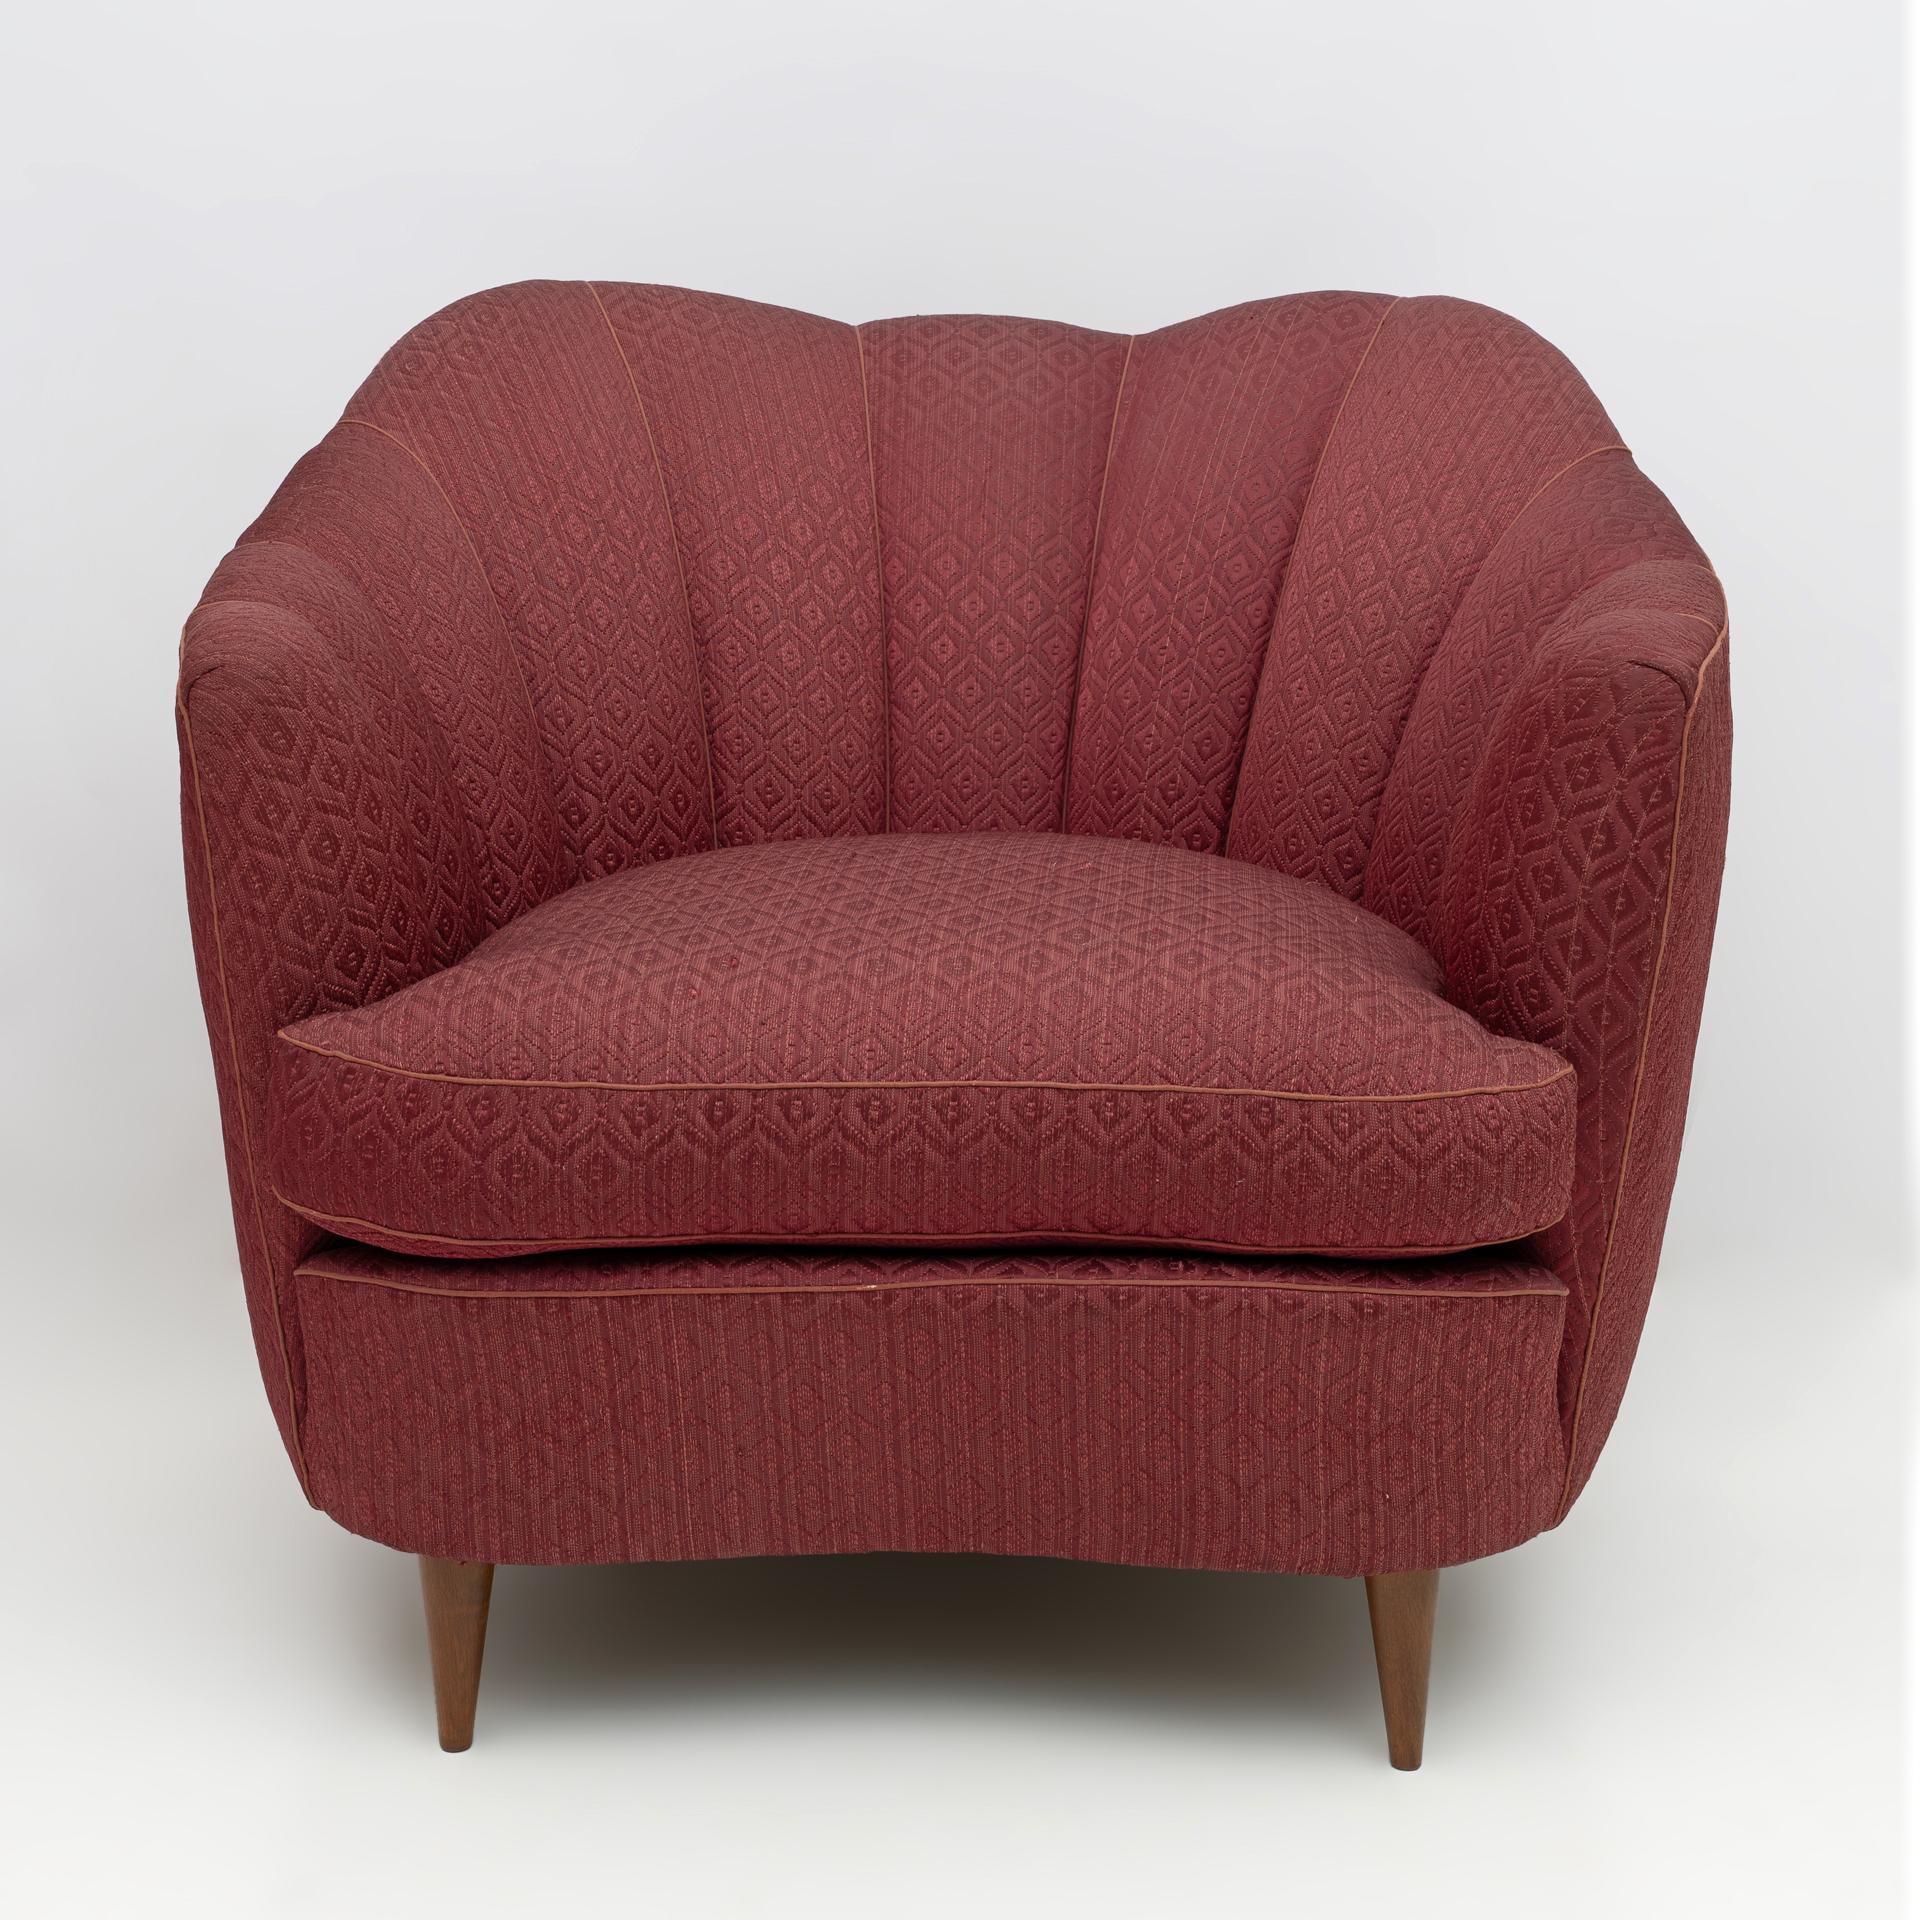 Pair of Gio Ponti Mid-Century Modern Velvet Armchairs for Casa e Giardino, 1950s For Sale 1